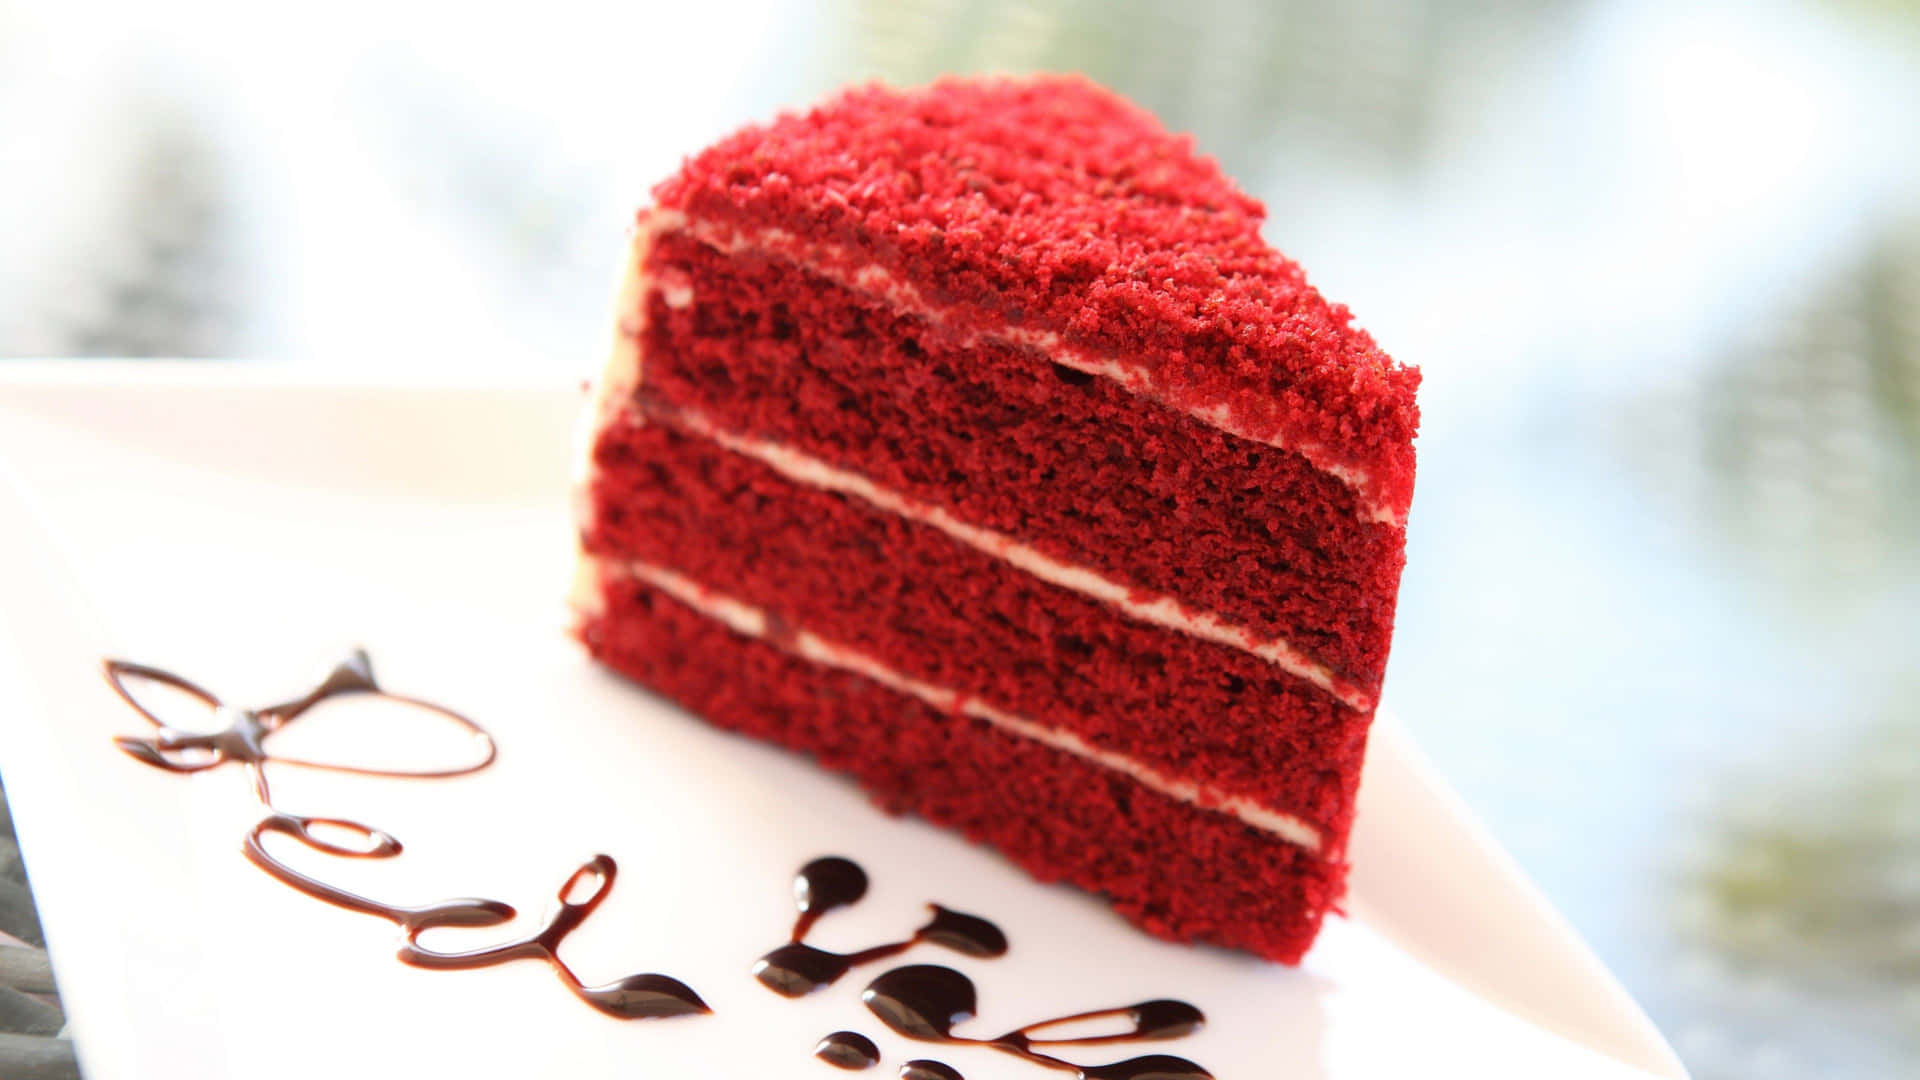 Scrumptious Red Velvet Cake on a Plate Wallpaper